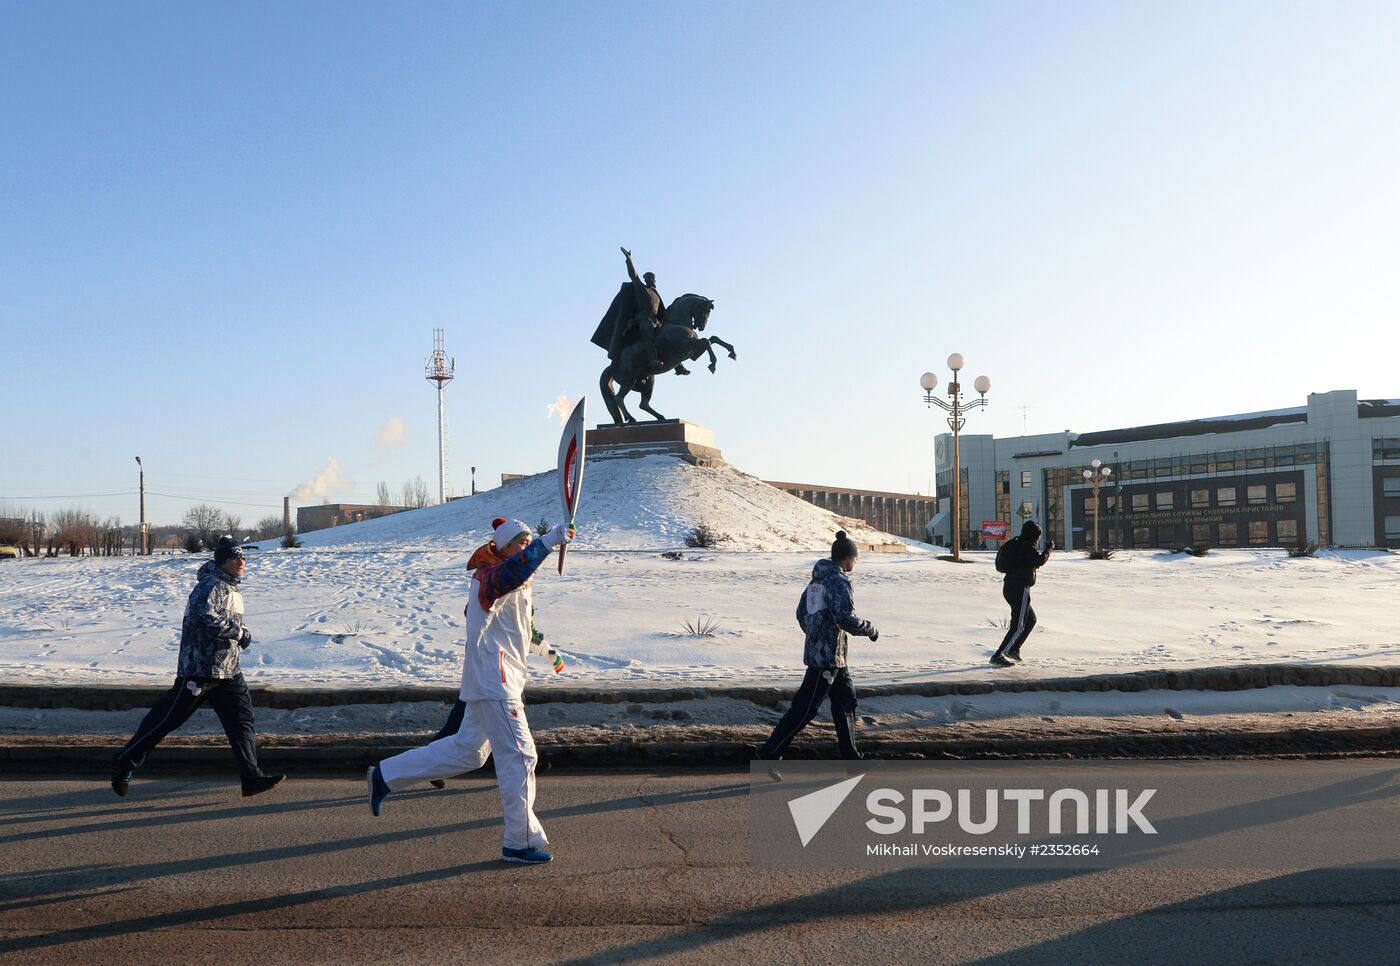 Sochi 2014 Olympic torch relay. Republic of Kalmykia